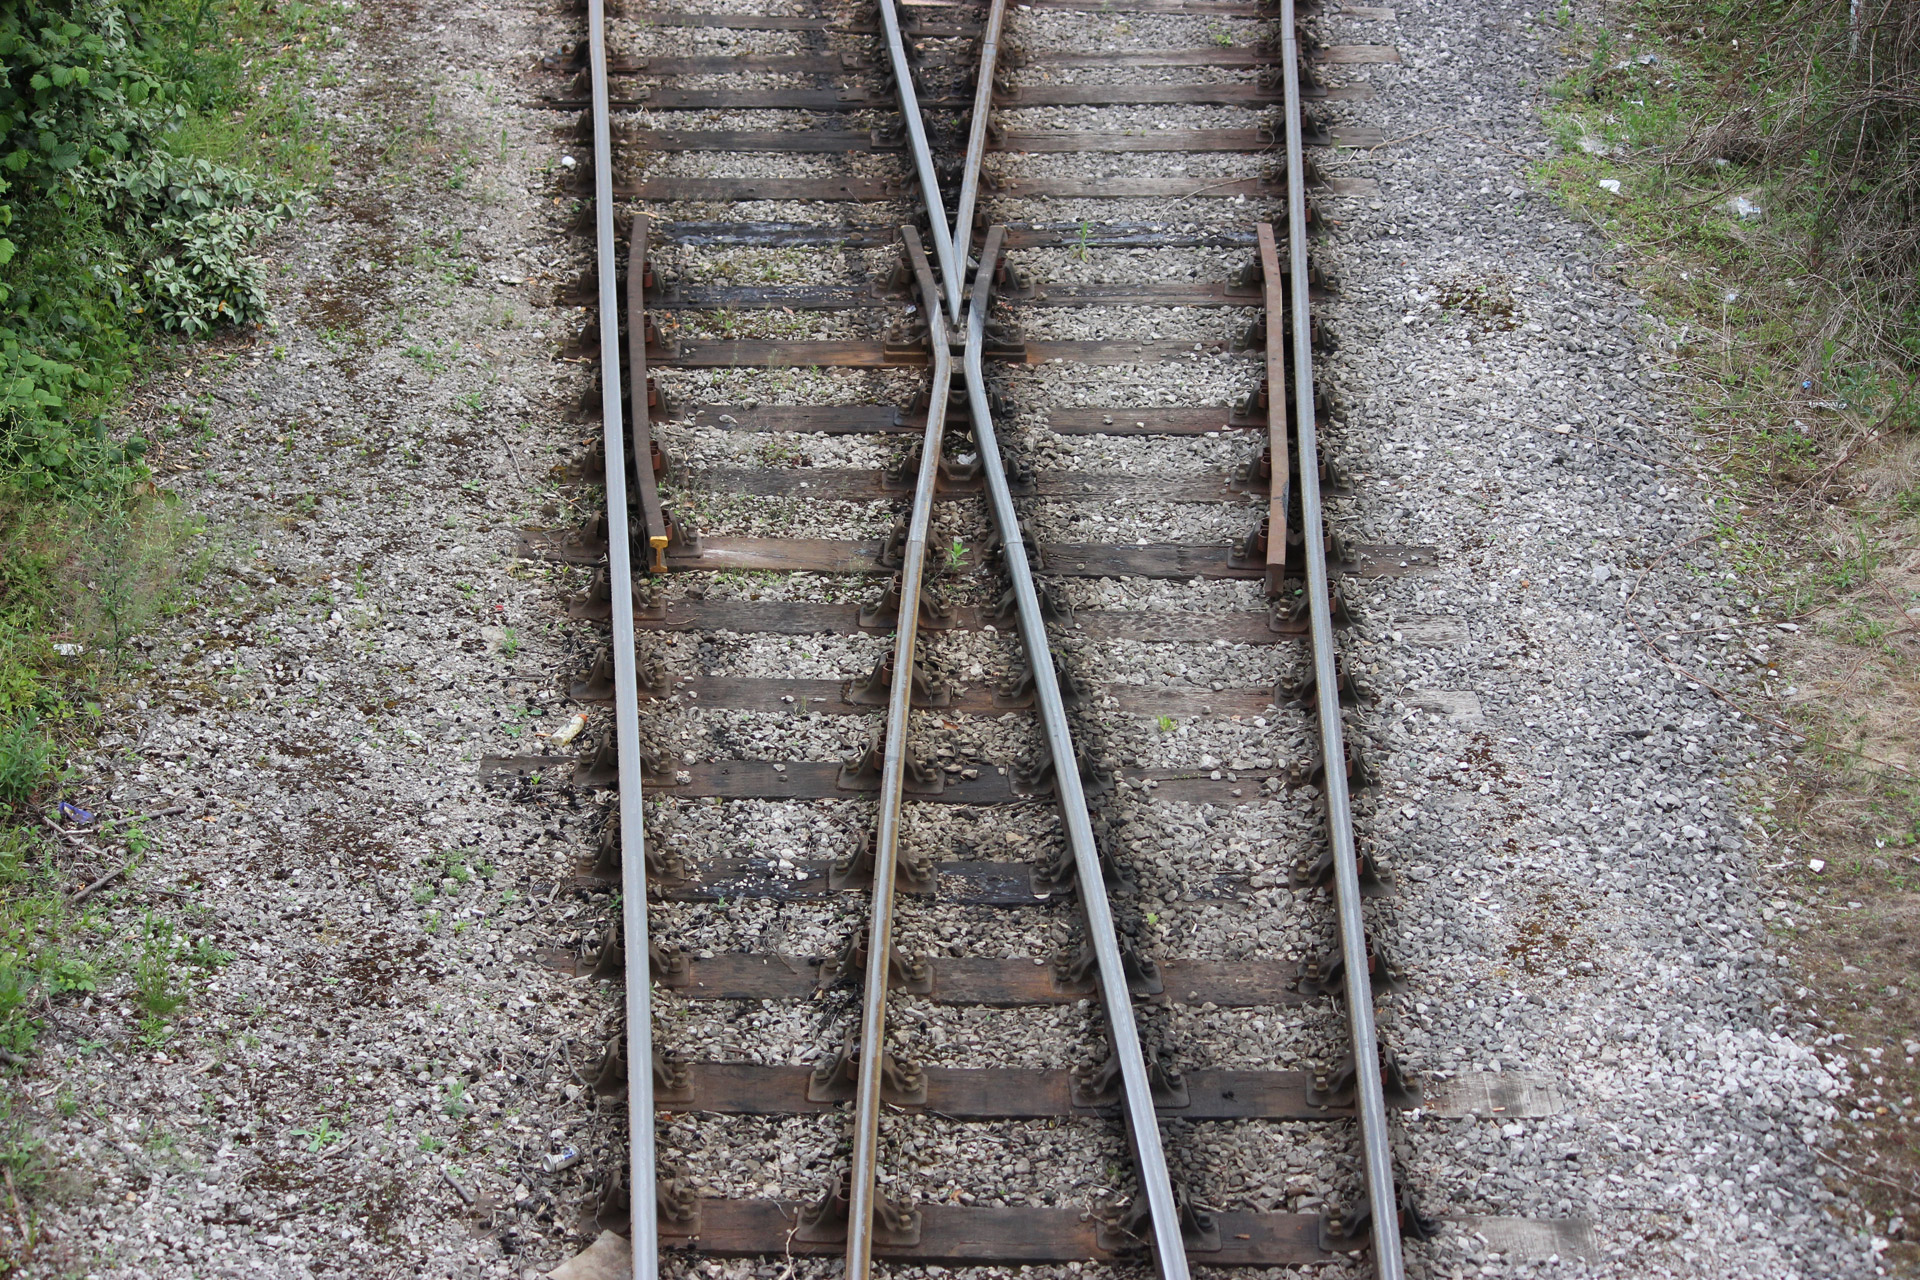 
                        train tracks
                     